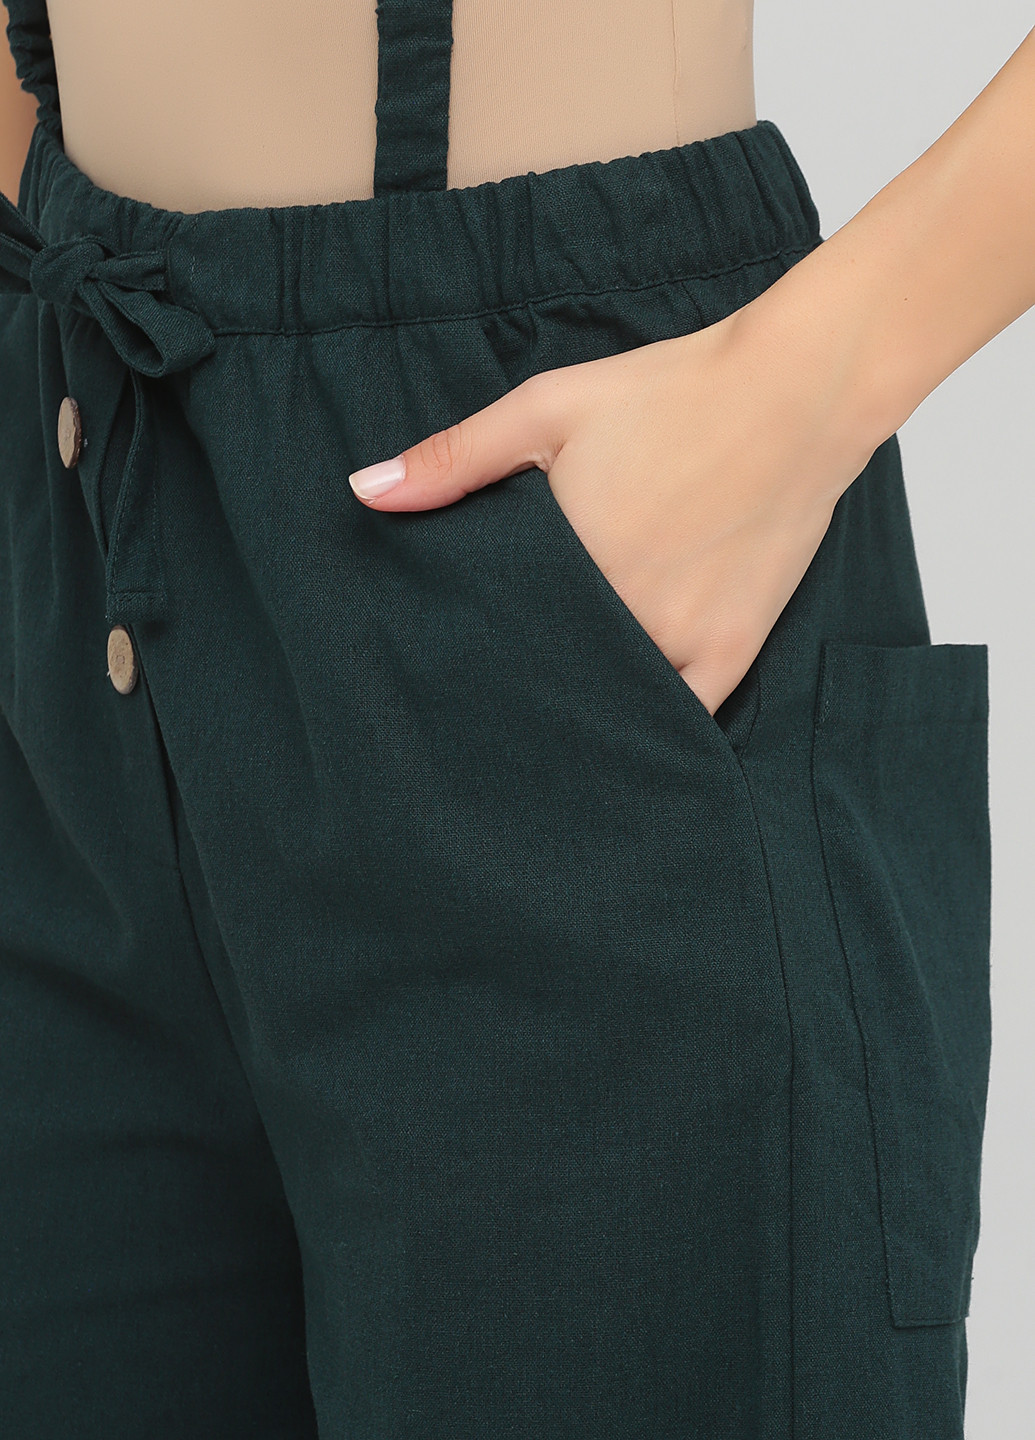 Комбинезон Arefeva комбинезон-брюки однотонный темно-зелёный кэжуал лен